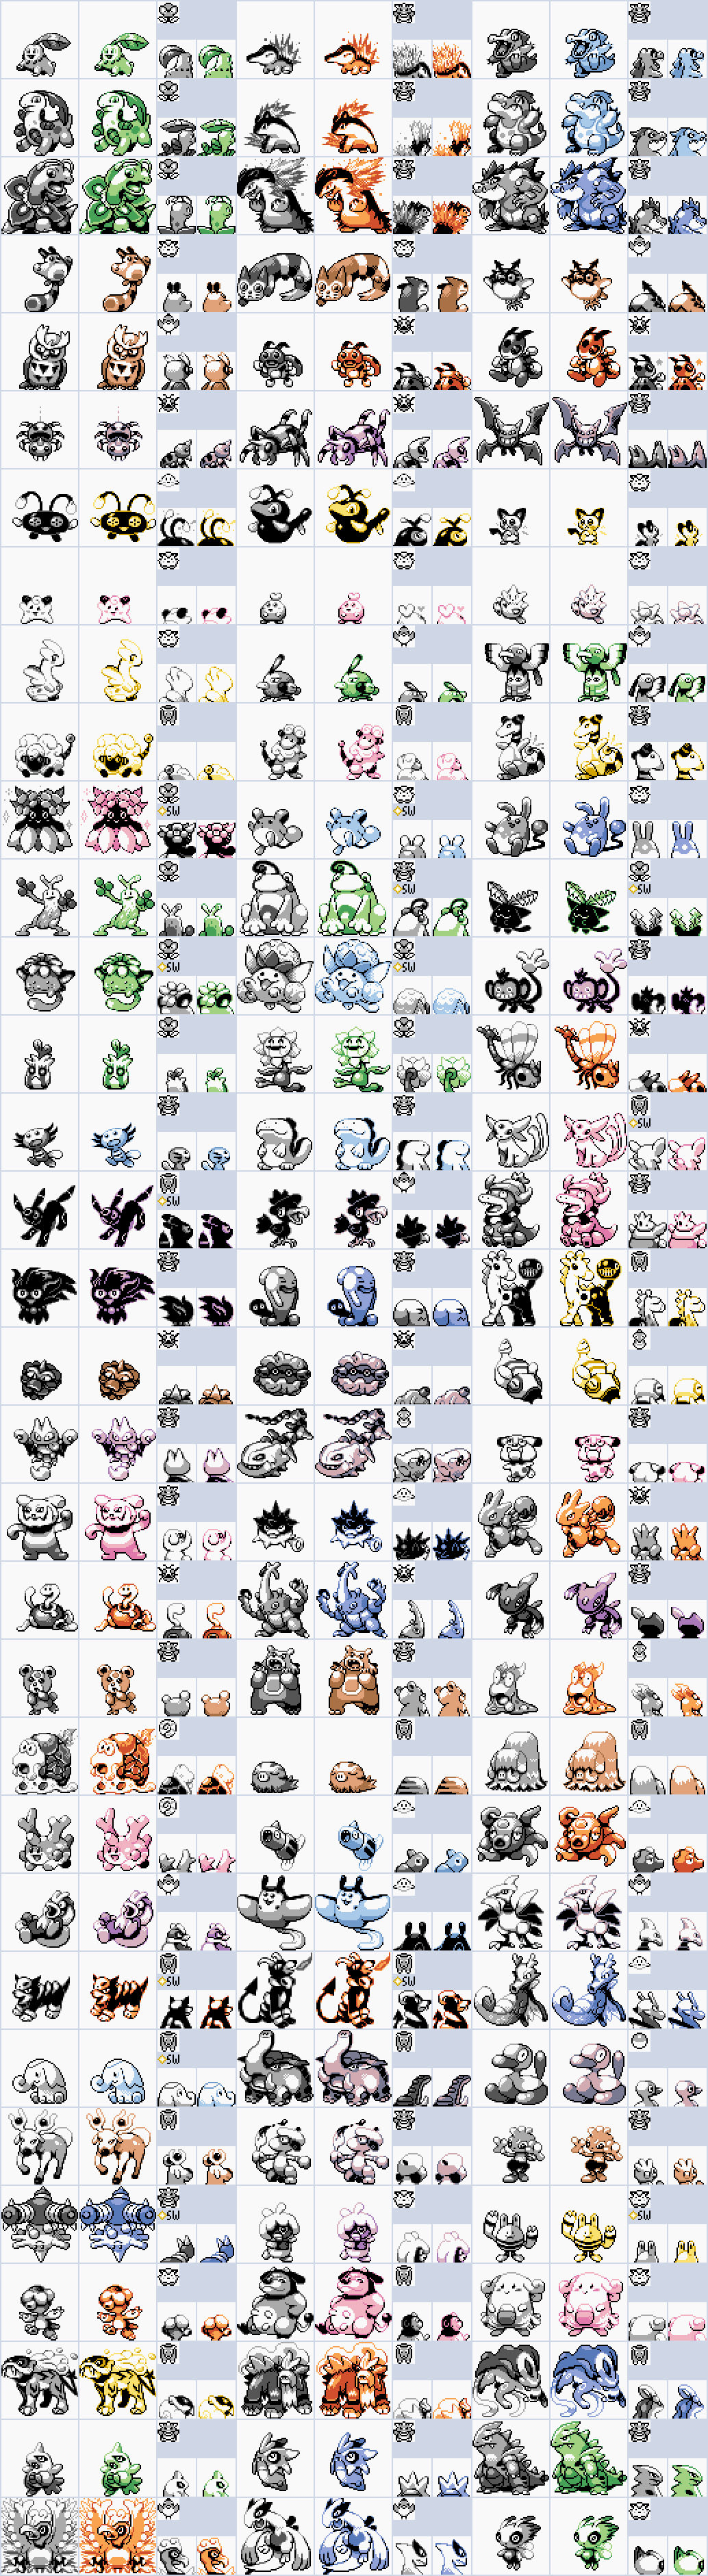 Every Gen 2 Pokemon Sprites in Gen 1's Style. by SkidMarc25 on DeviantArt